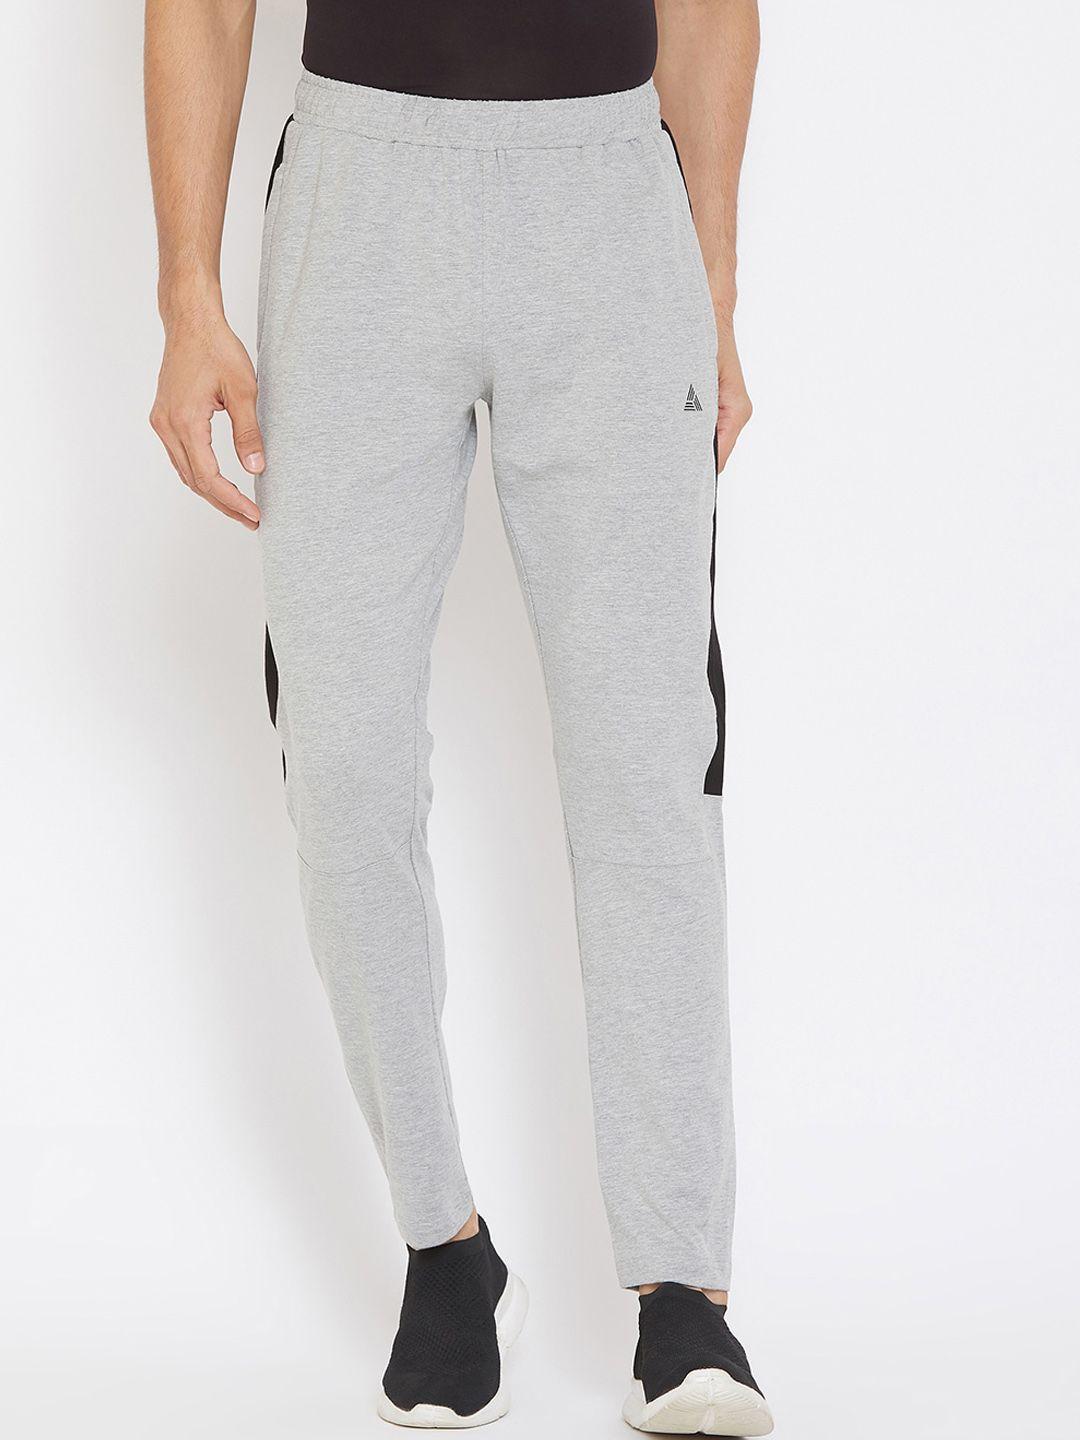 athlisis men grey solid slim-fit pure cotton track pants